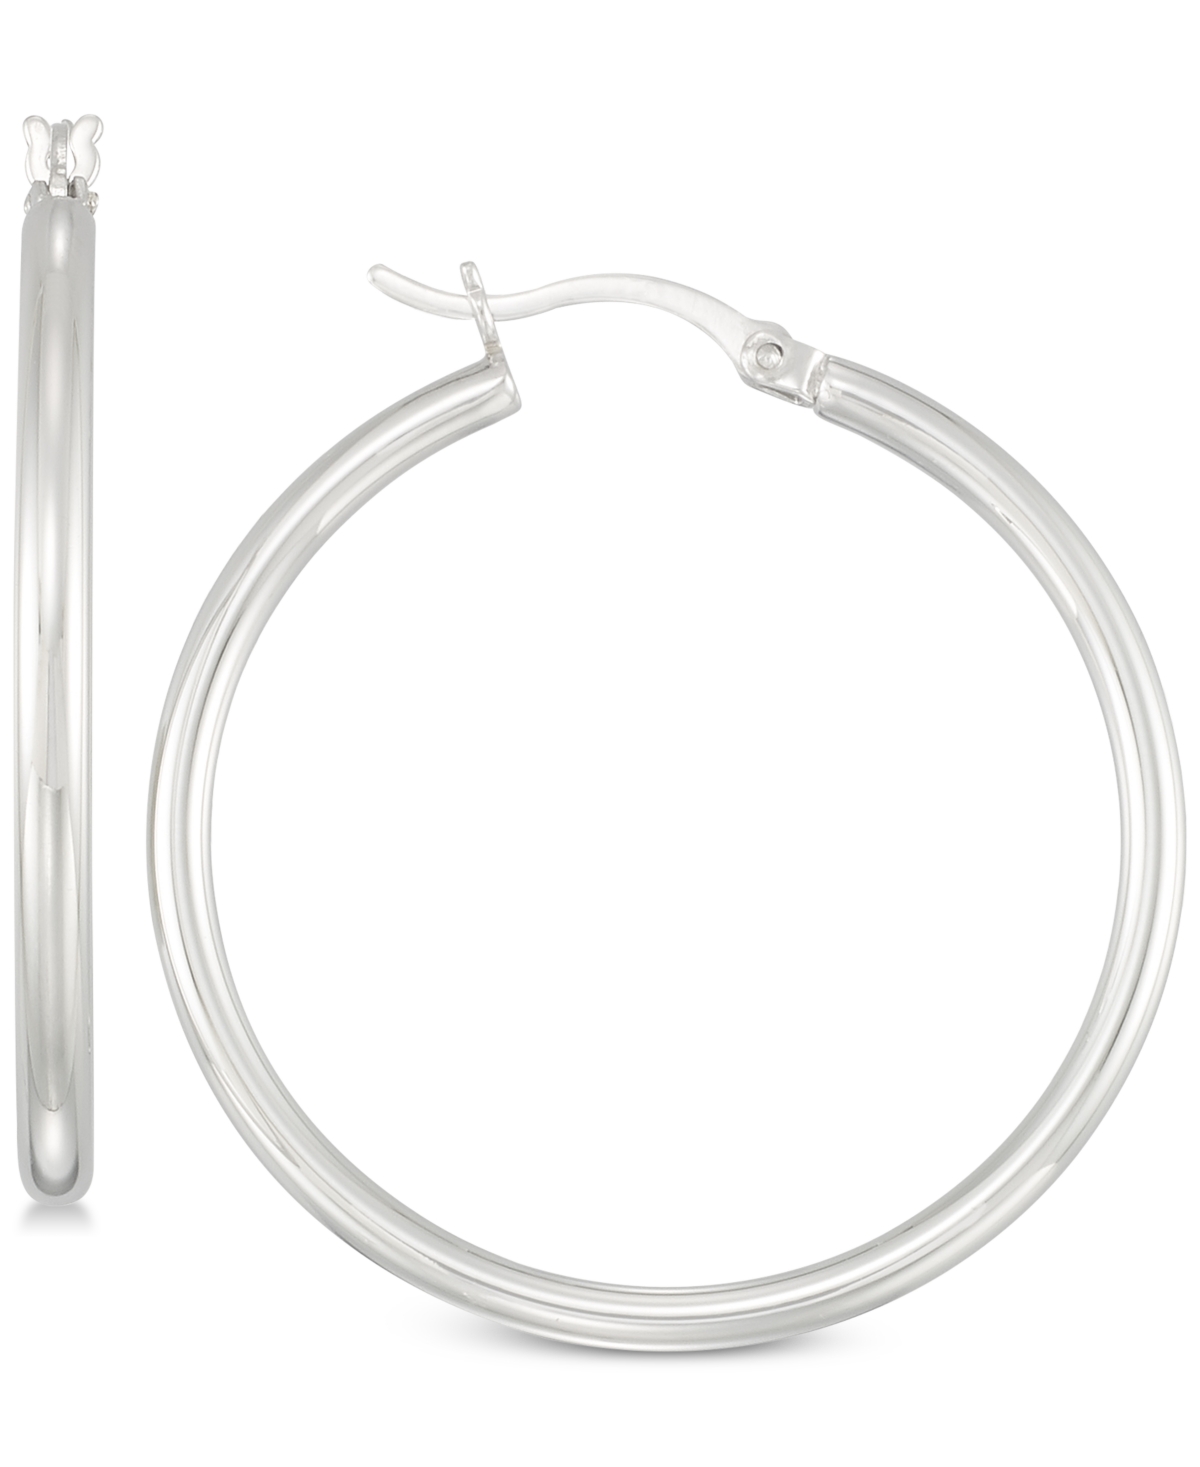 Polished Hoop Earrings in Sterling Silver - Silver